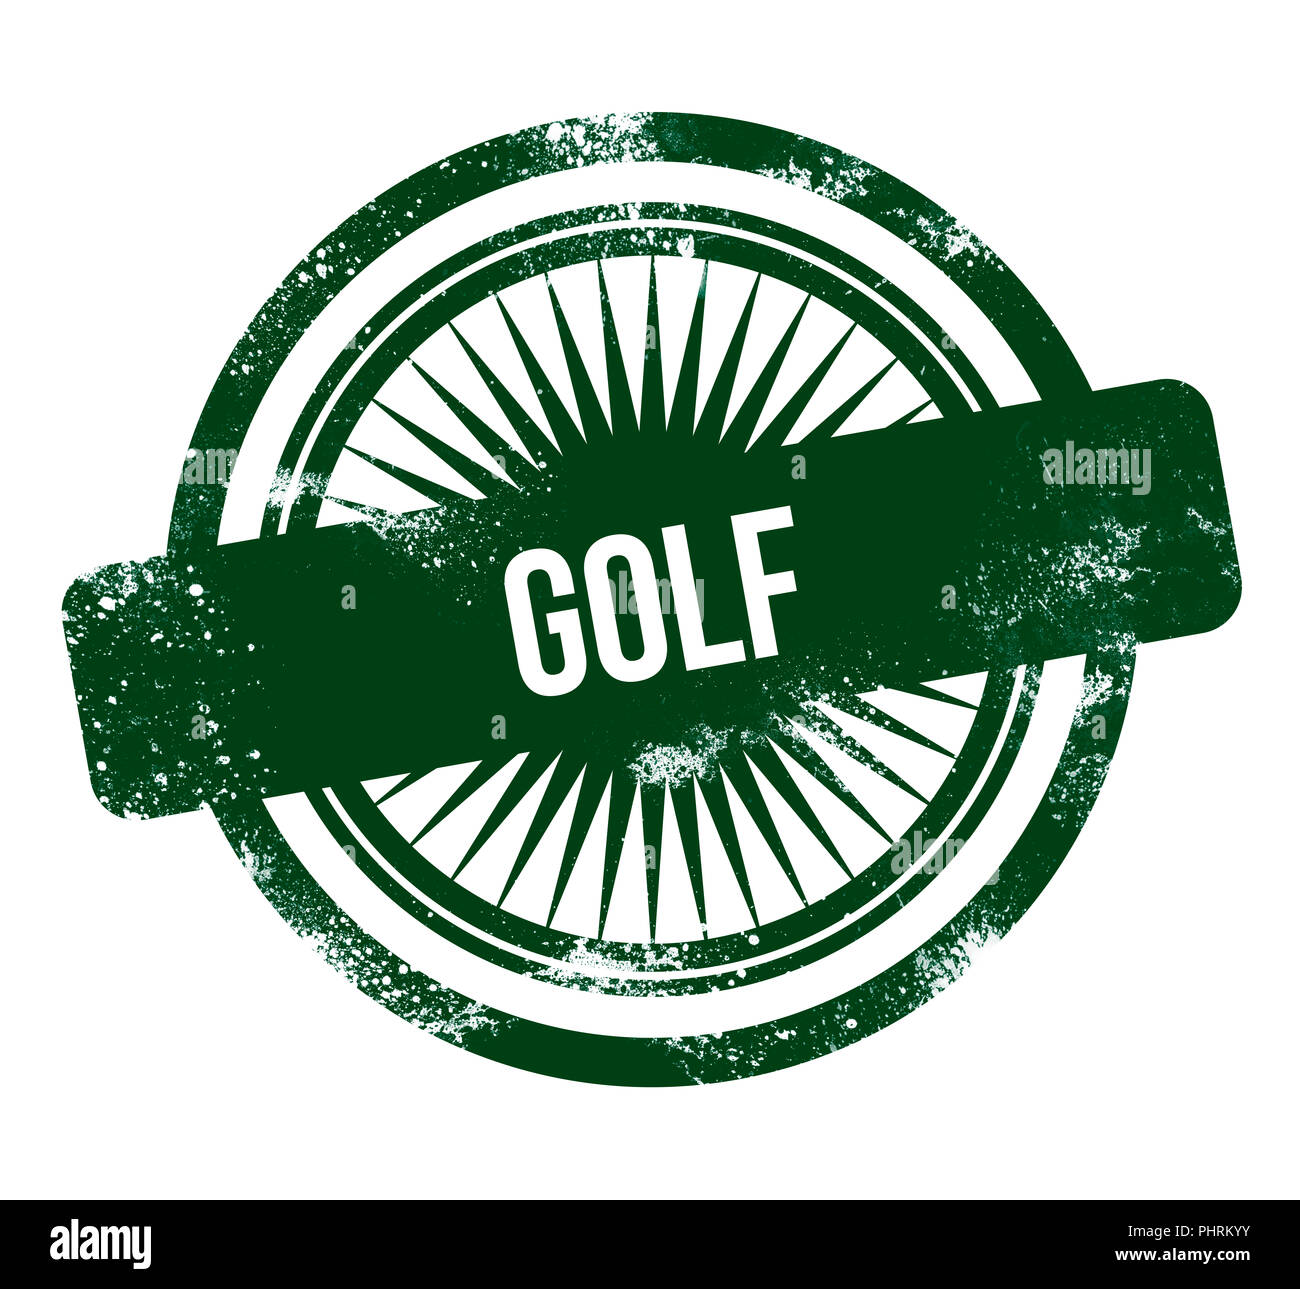 Golf - green grunge stamp Stock Photo